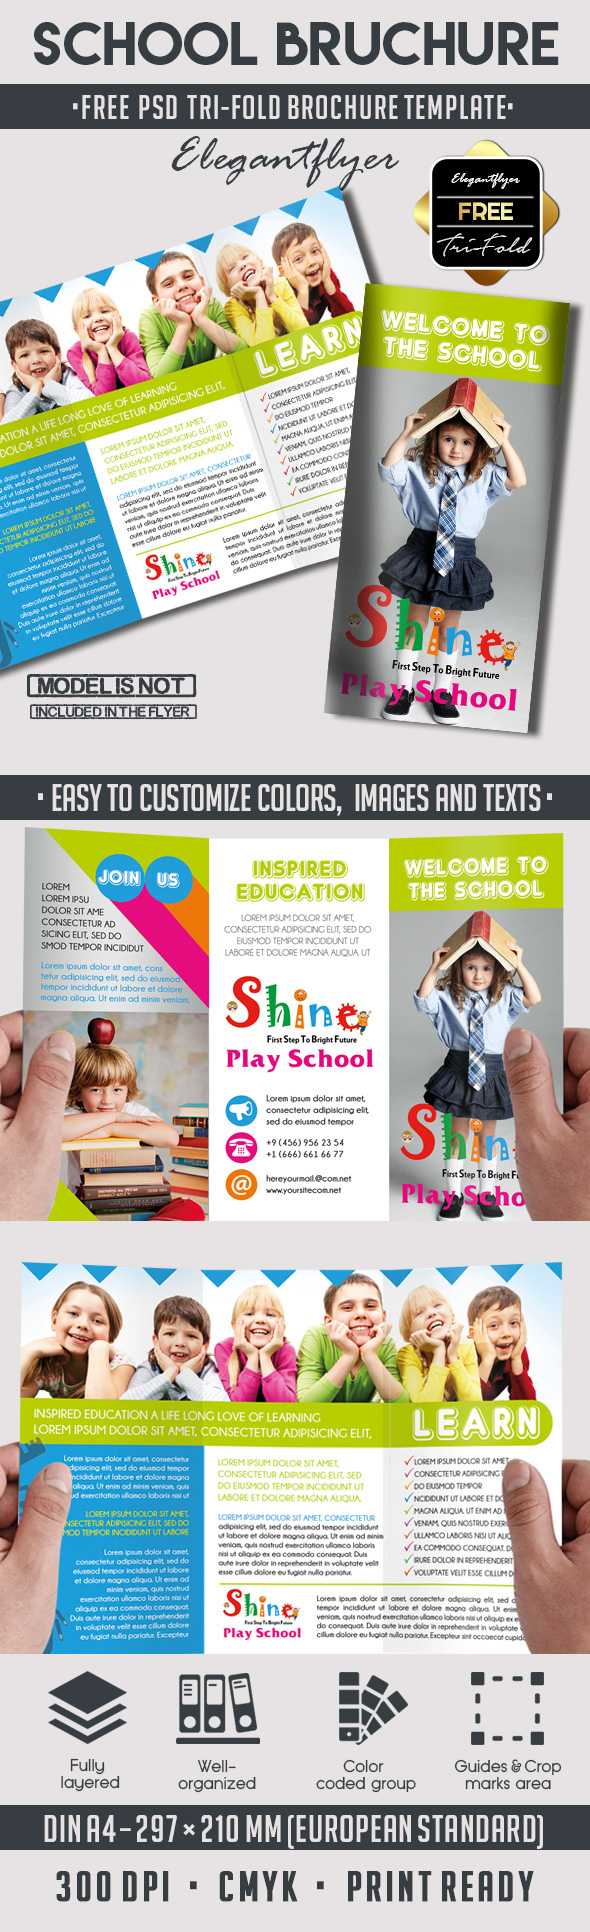 School – Free Psd Tri Fold Psd Brochure Template On Behance Regarding Play School Brochure Templates